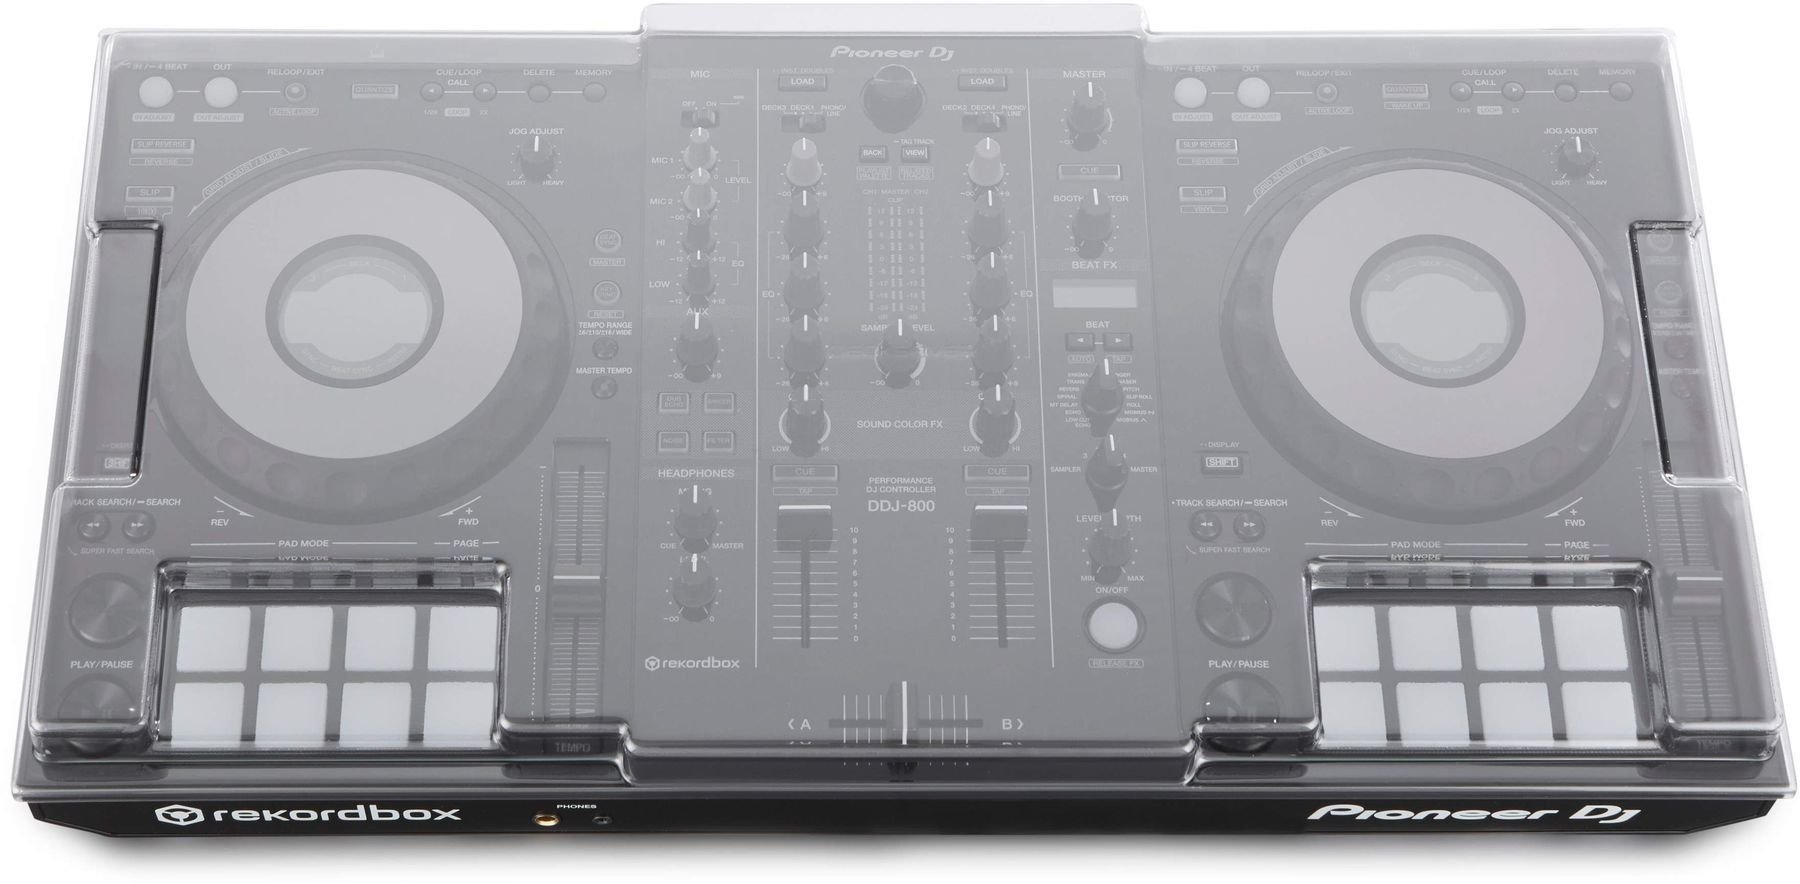 Pokrywa ochronna na kontroler DJ Decksaver Pioneer DDJ-800